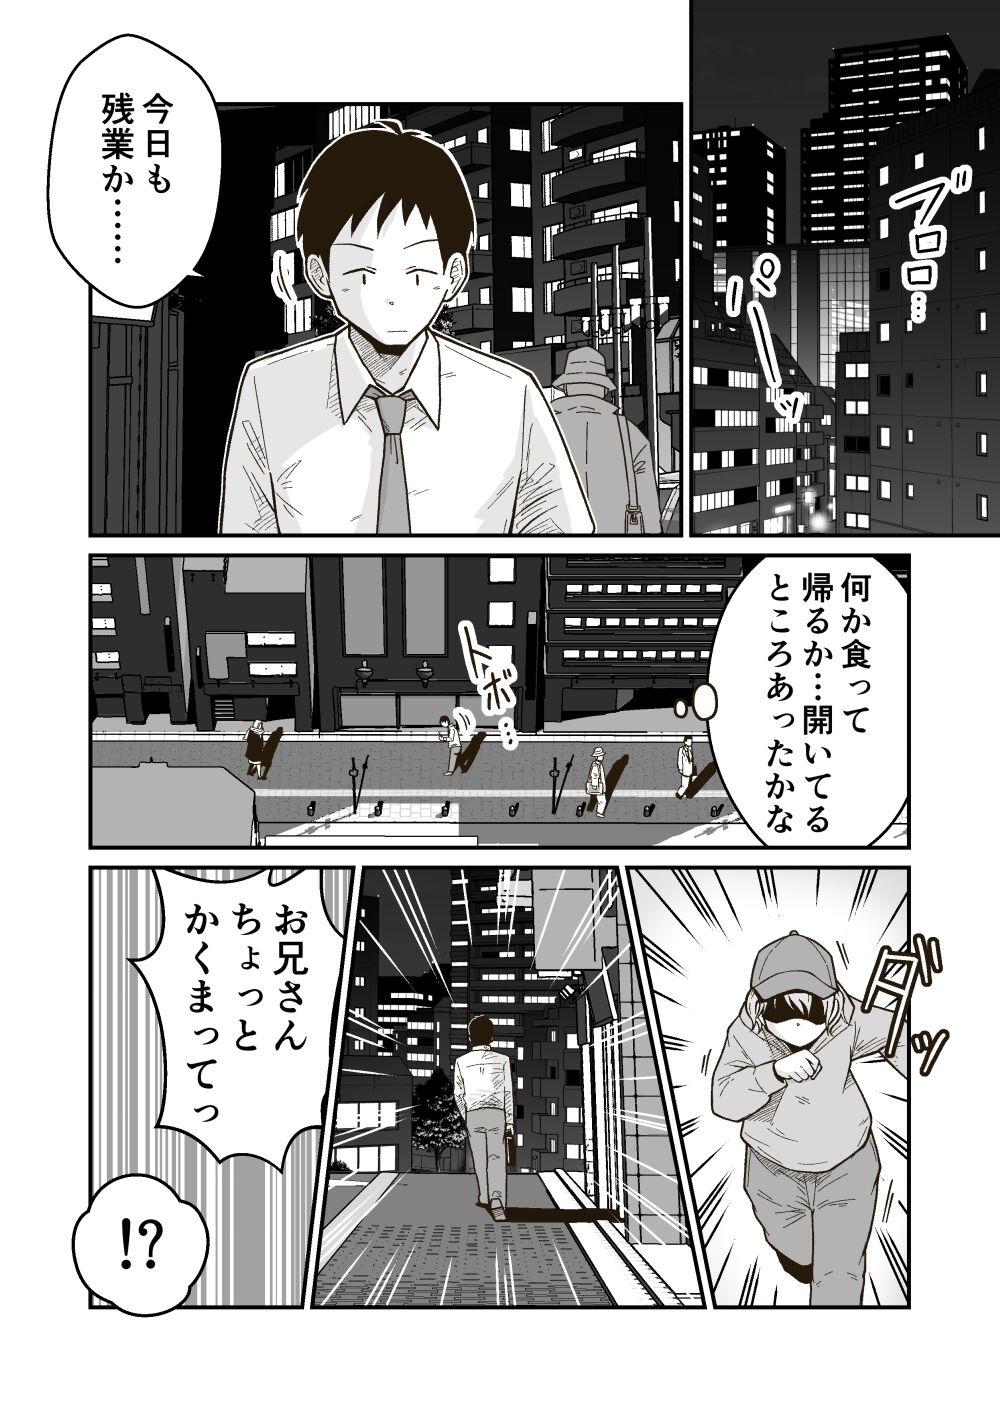 Casero 家出少年のユウキくん - Original Hot - Page 2